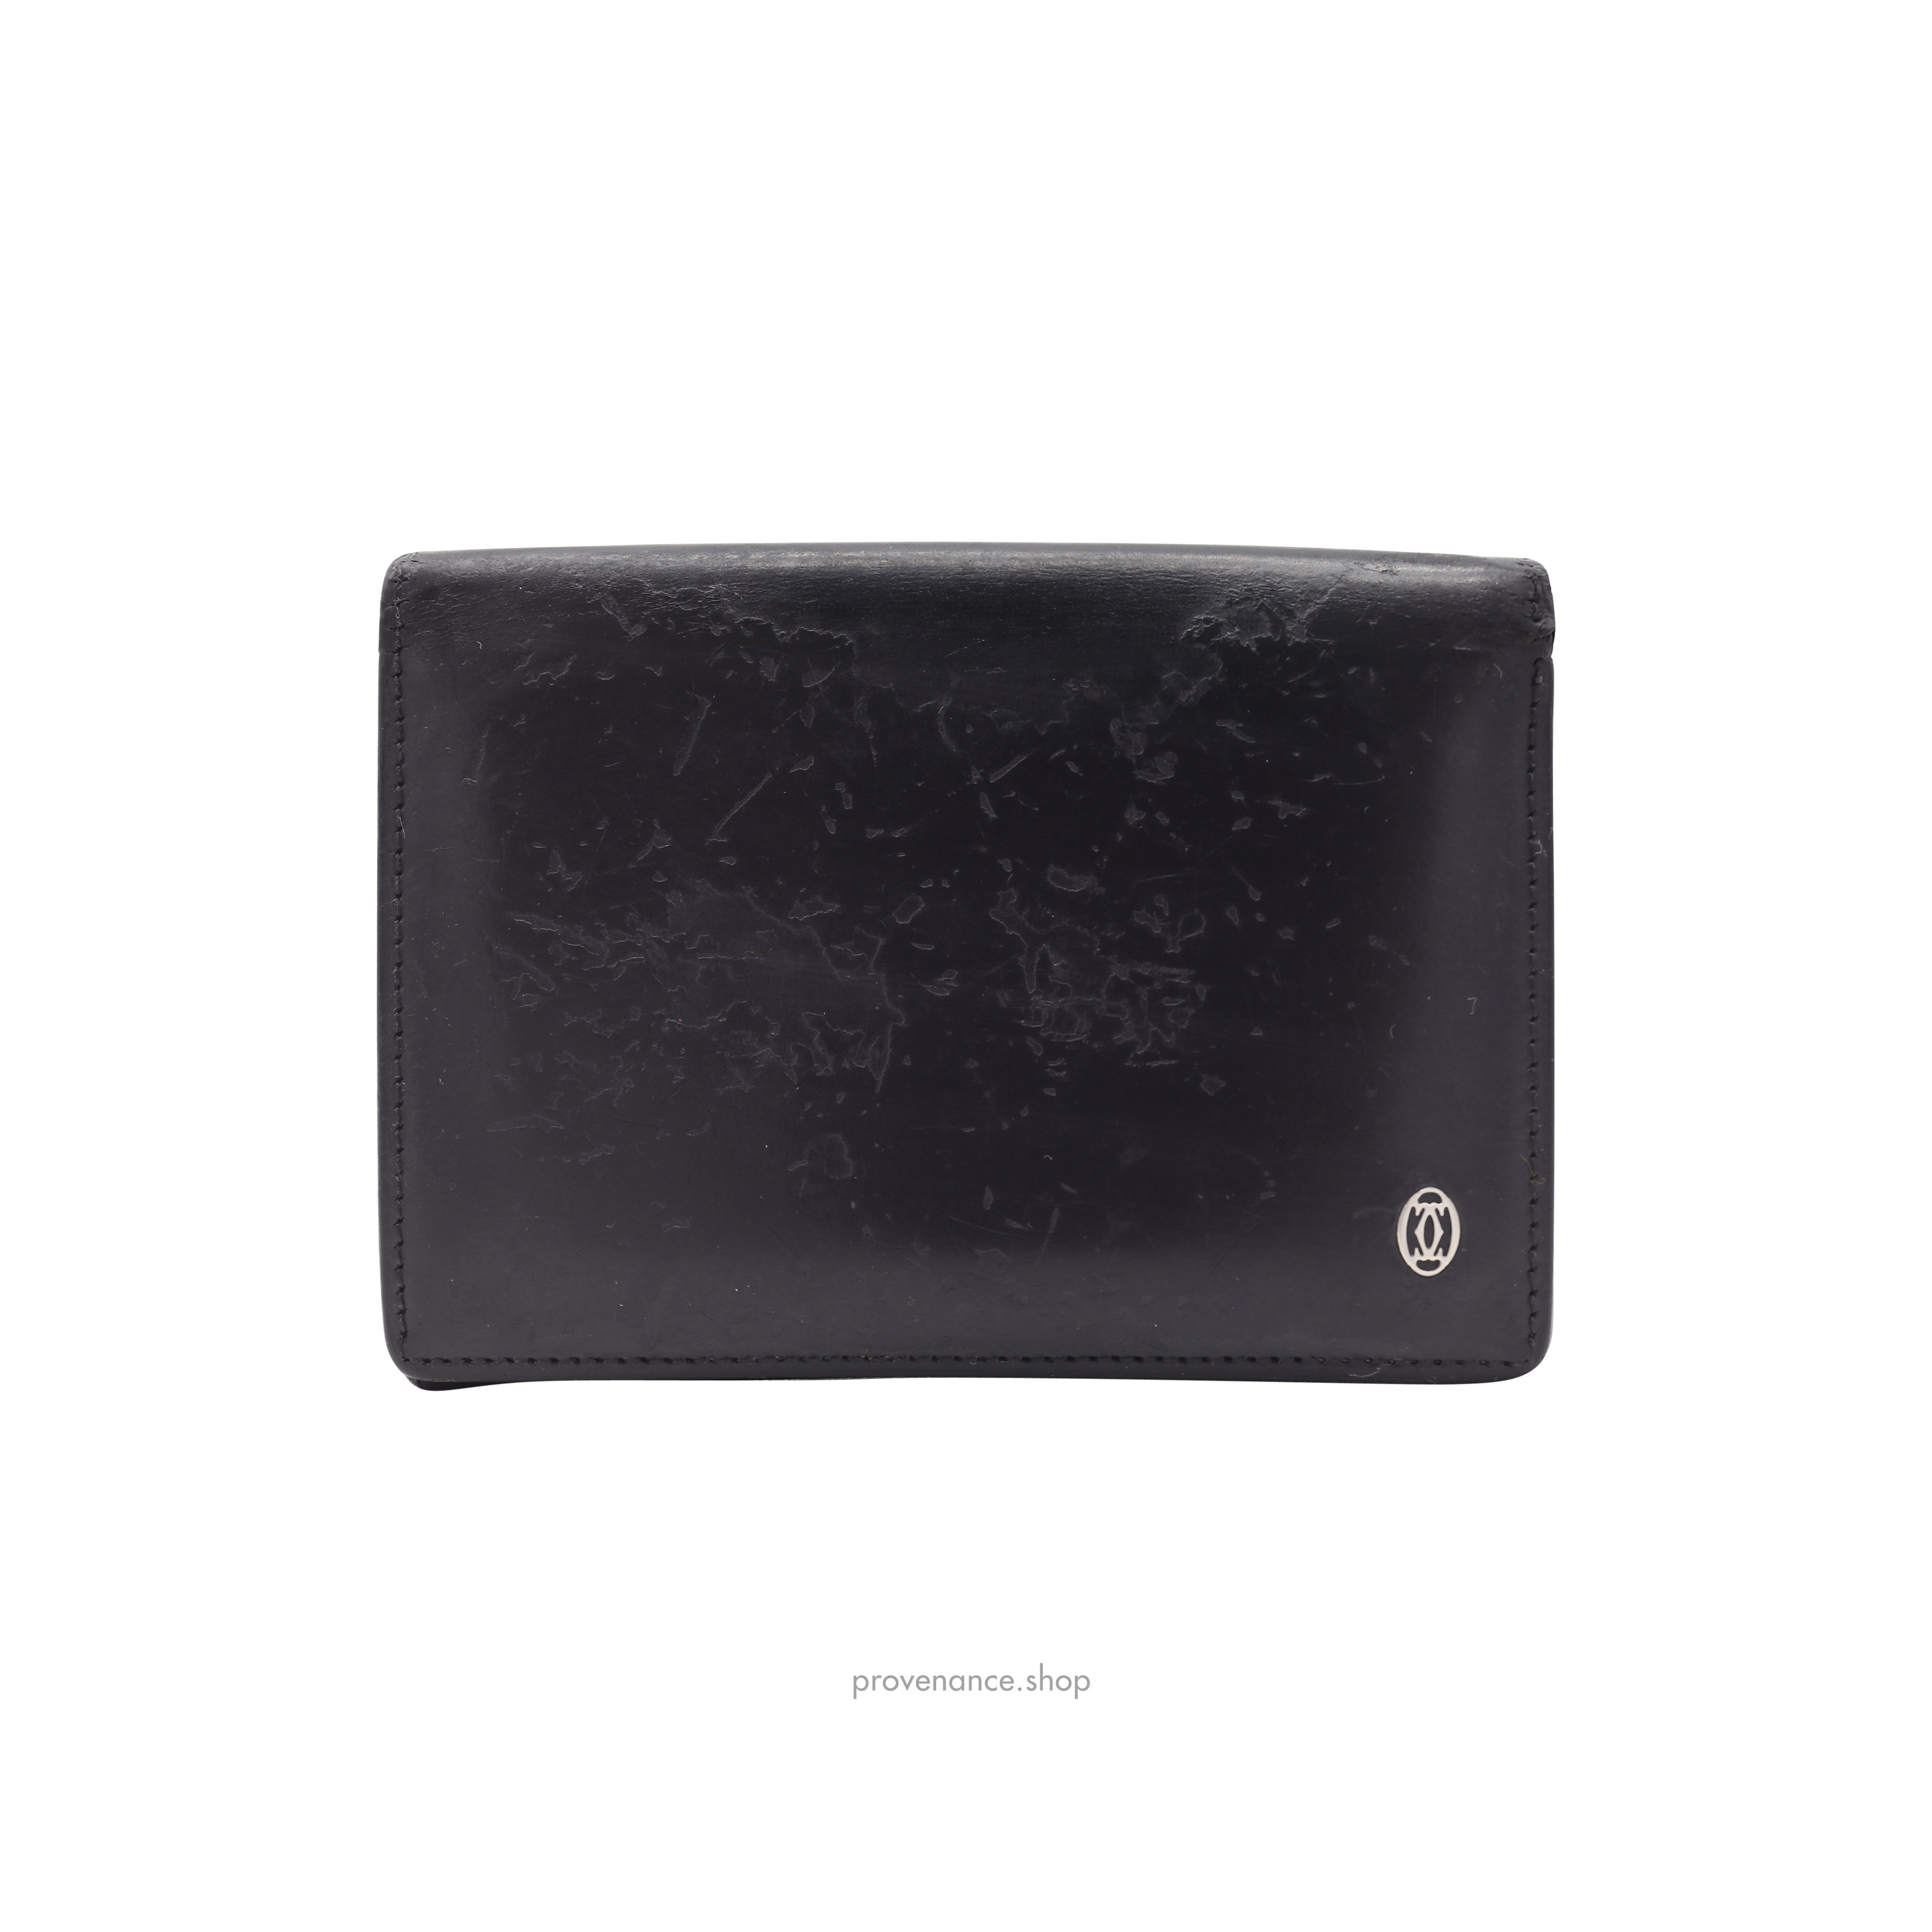 Cartier Pocket Organizer Wallet - Black Leather - 1